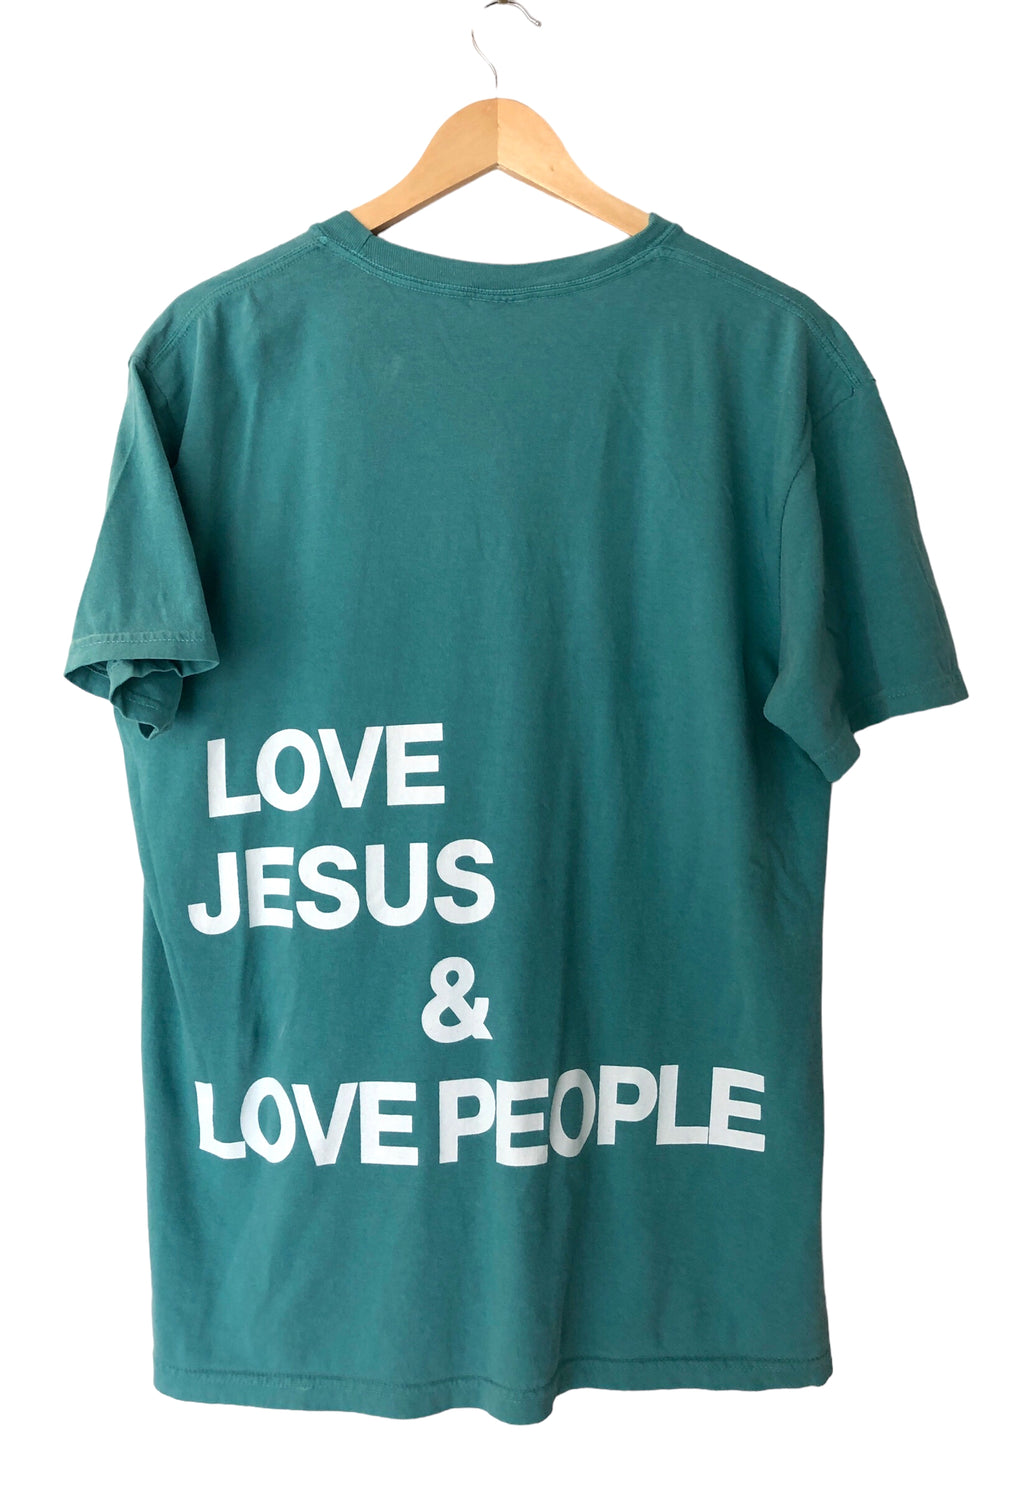 LOVE JESUS & LOVE PEOPLE SEAFOAM SLEEVE T-SHIRT